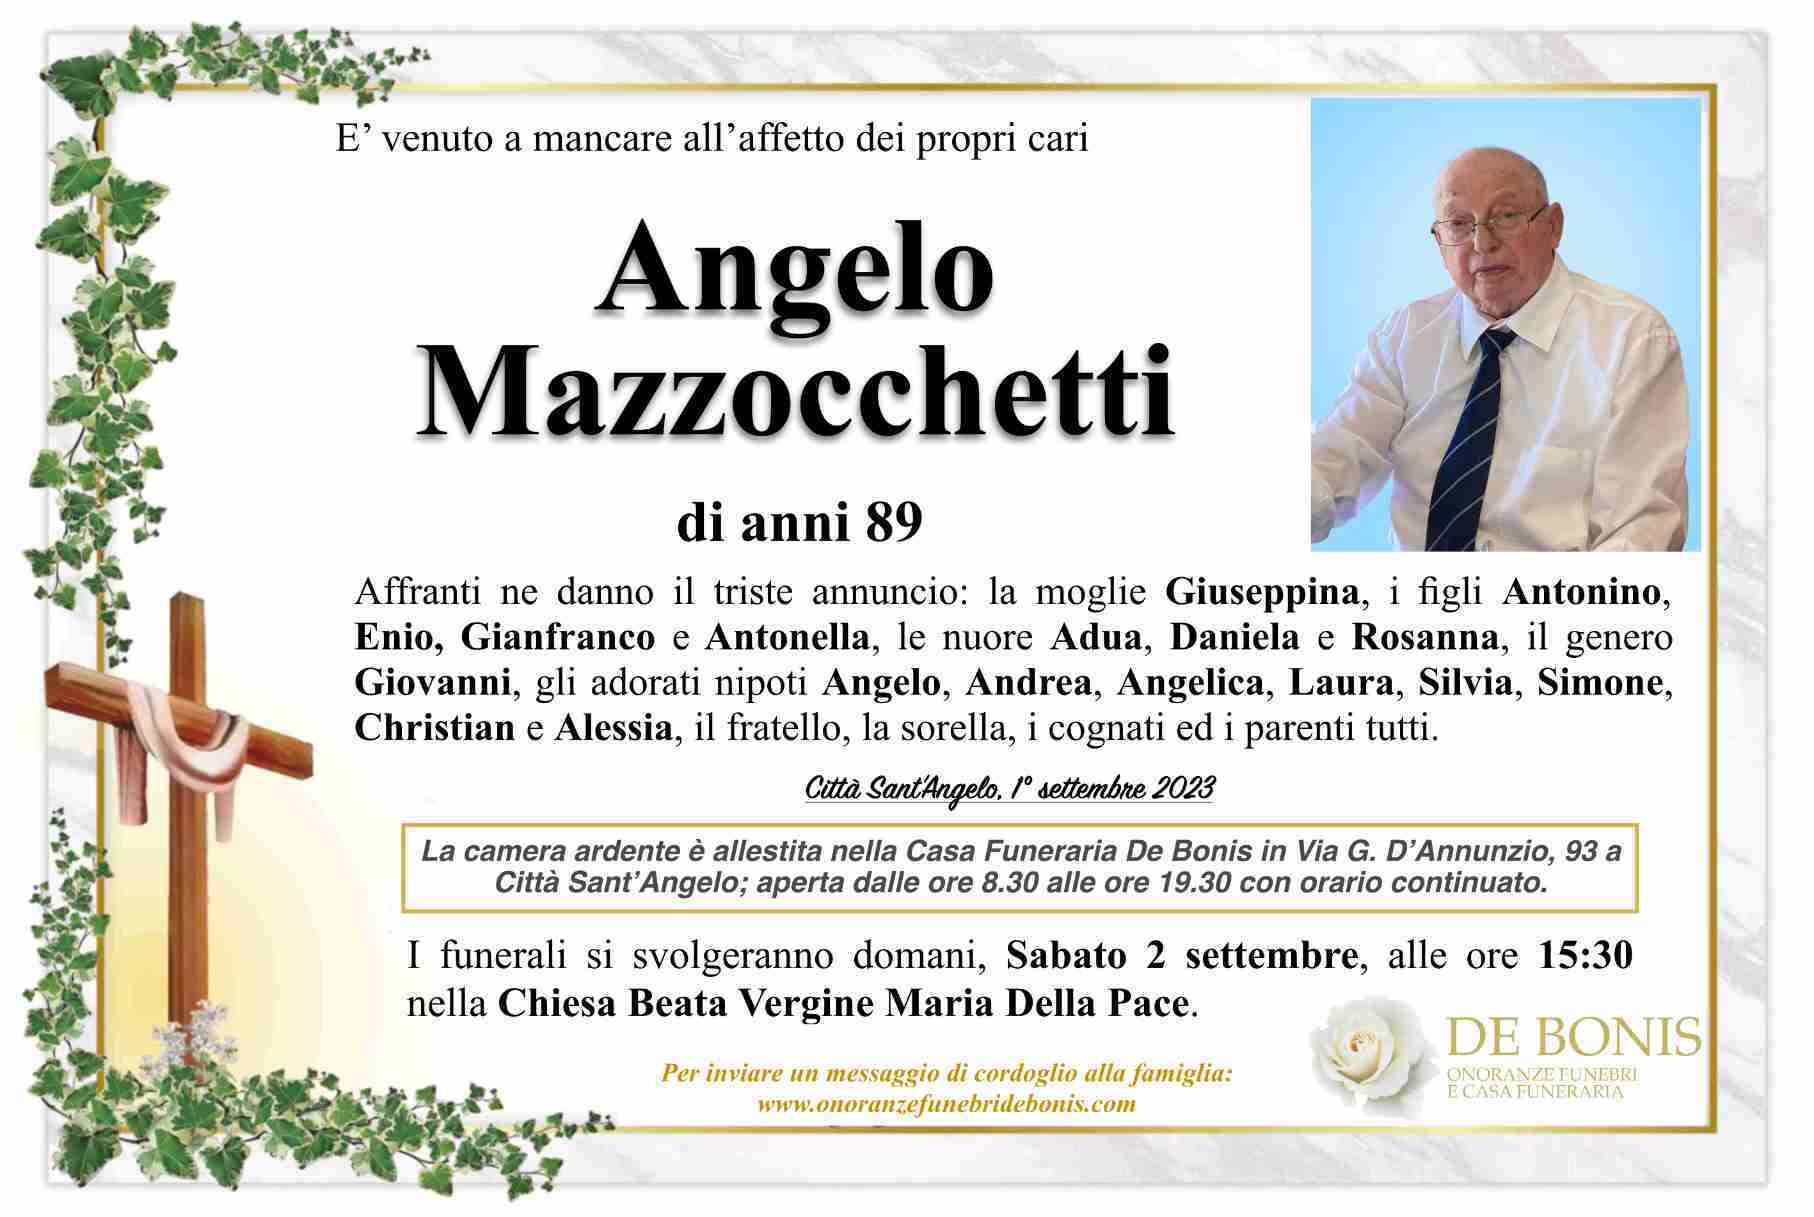 Angelo Mazzocchetti